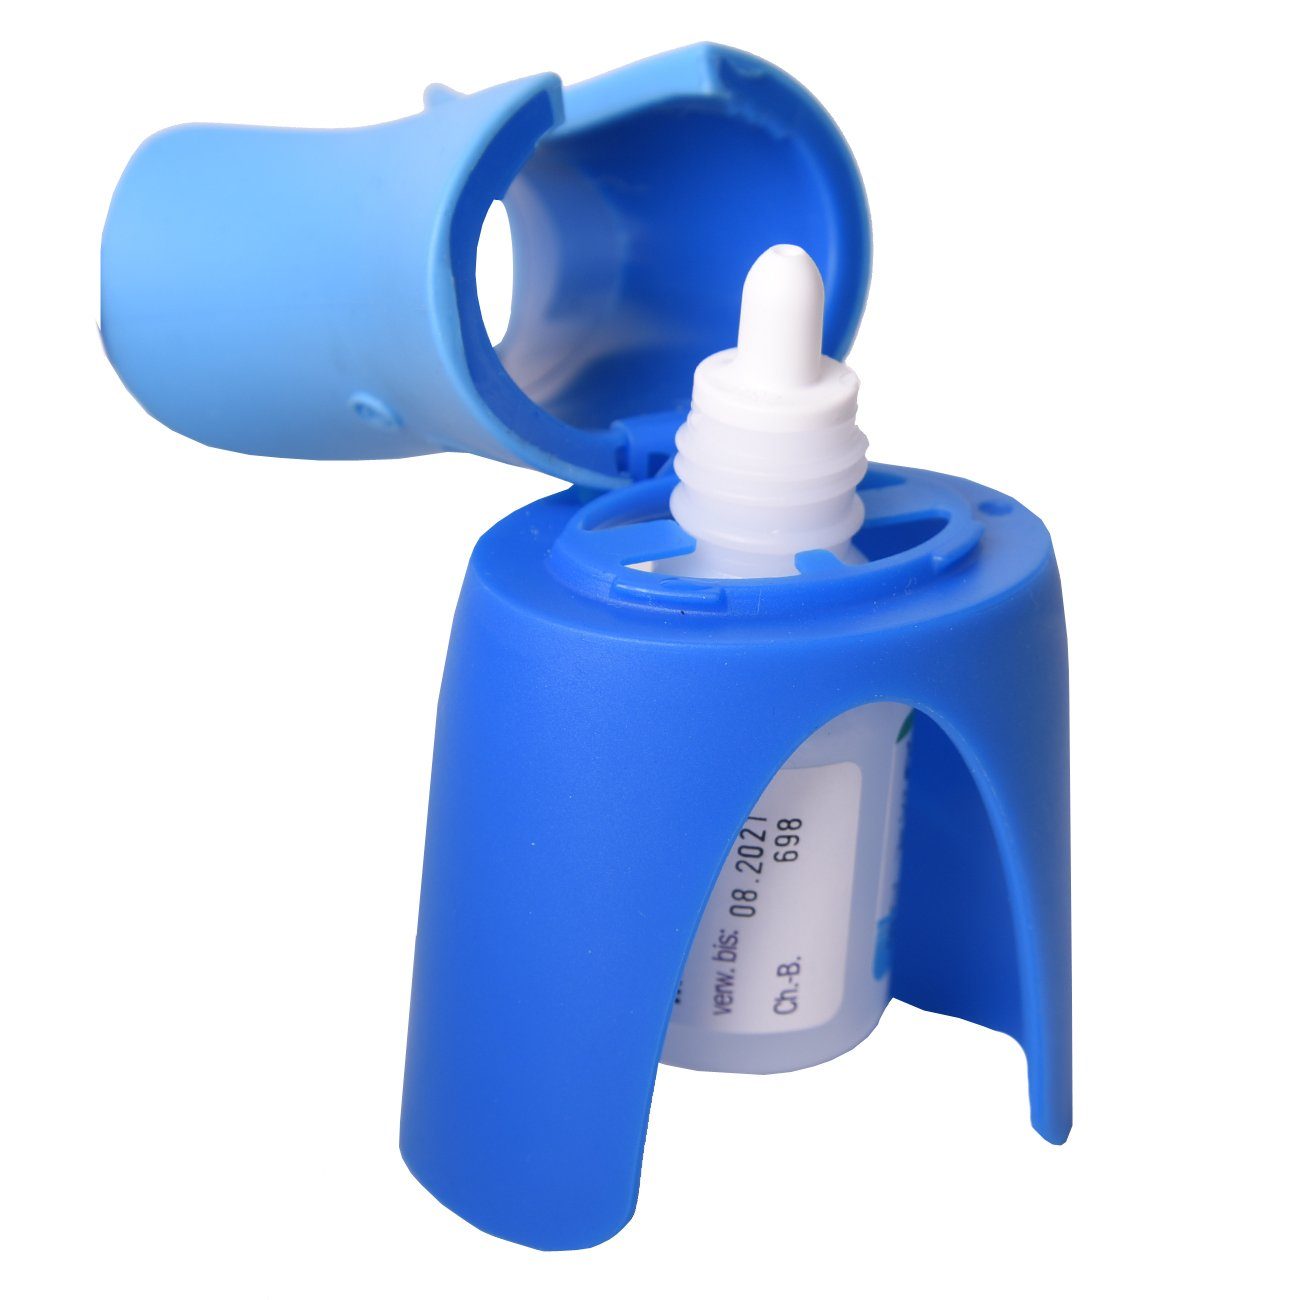 Blau Applikationshelfer Augenpflege-Set Remedic Premium Augentropfen-Hilfe